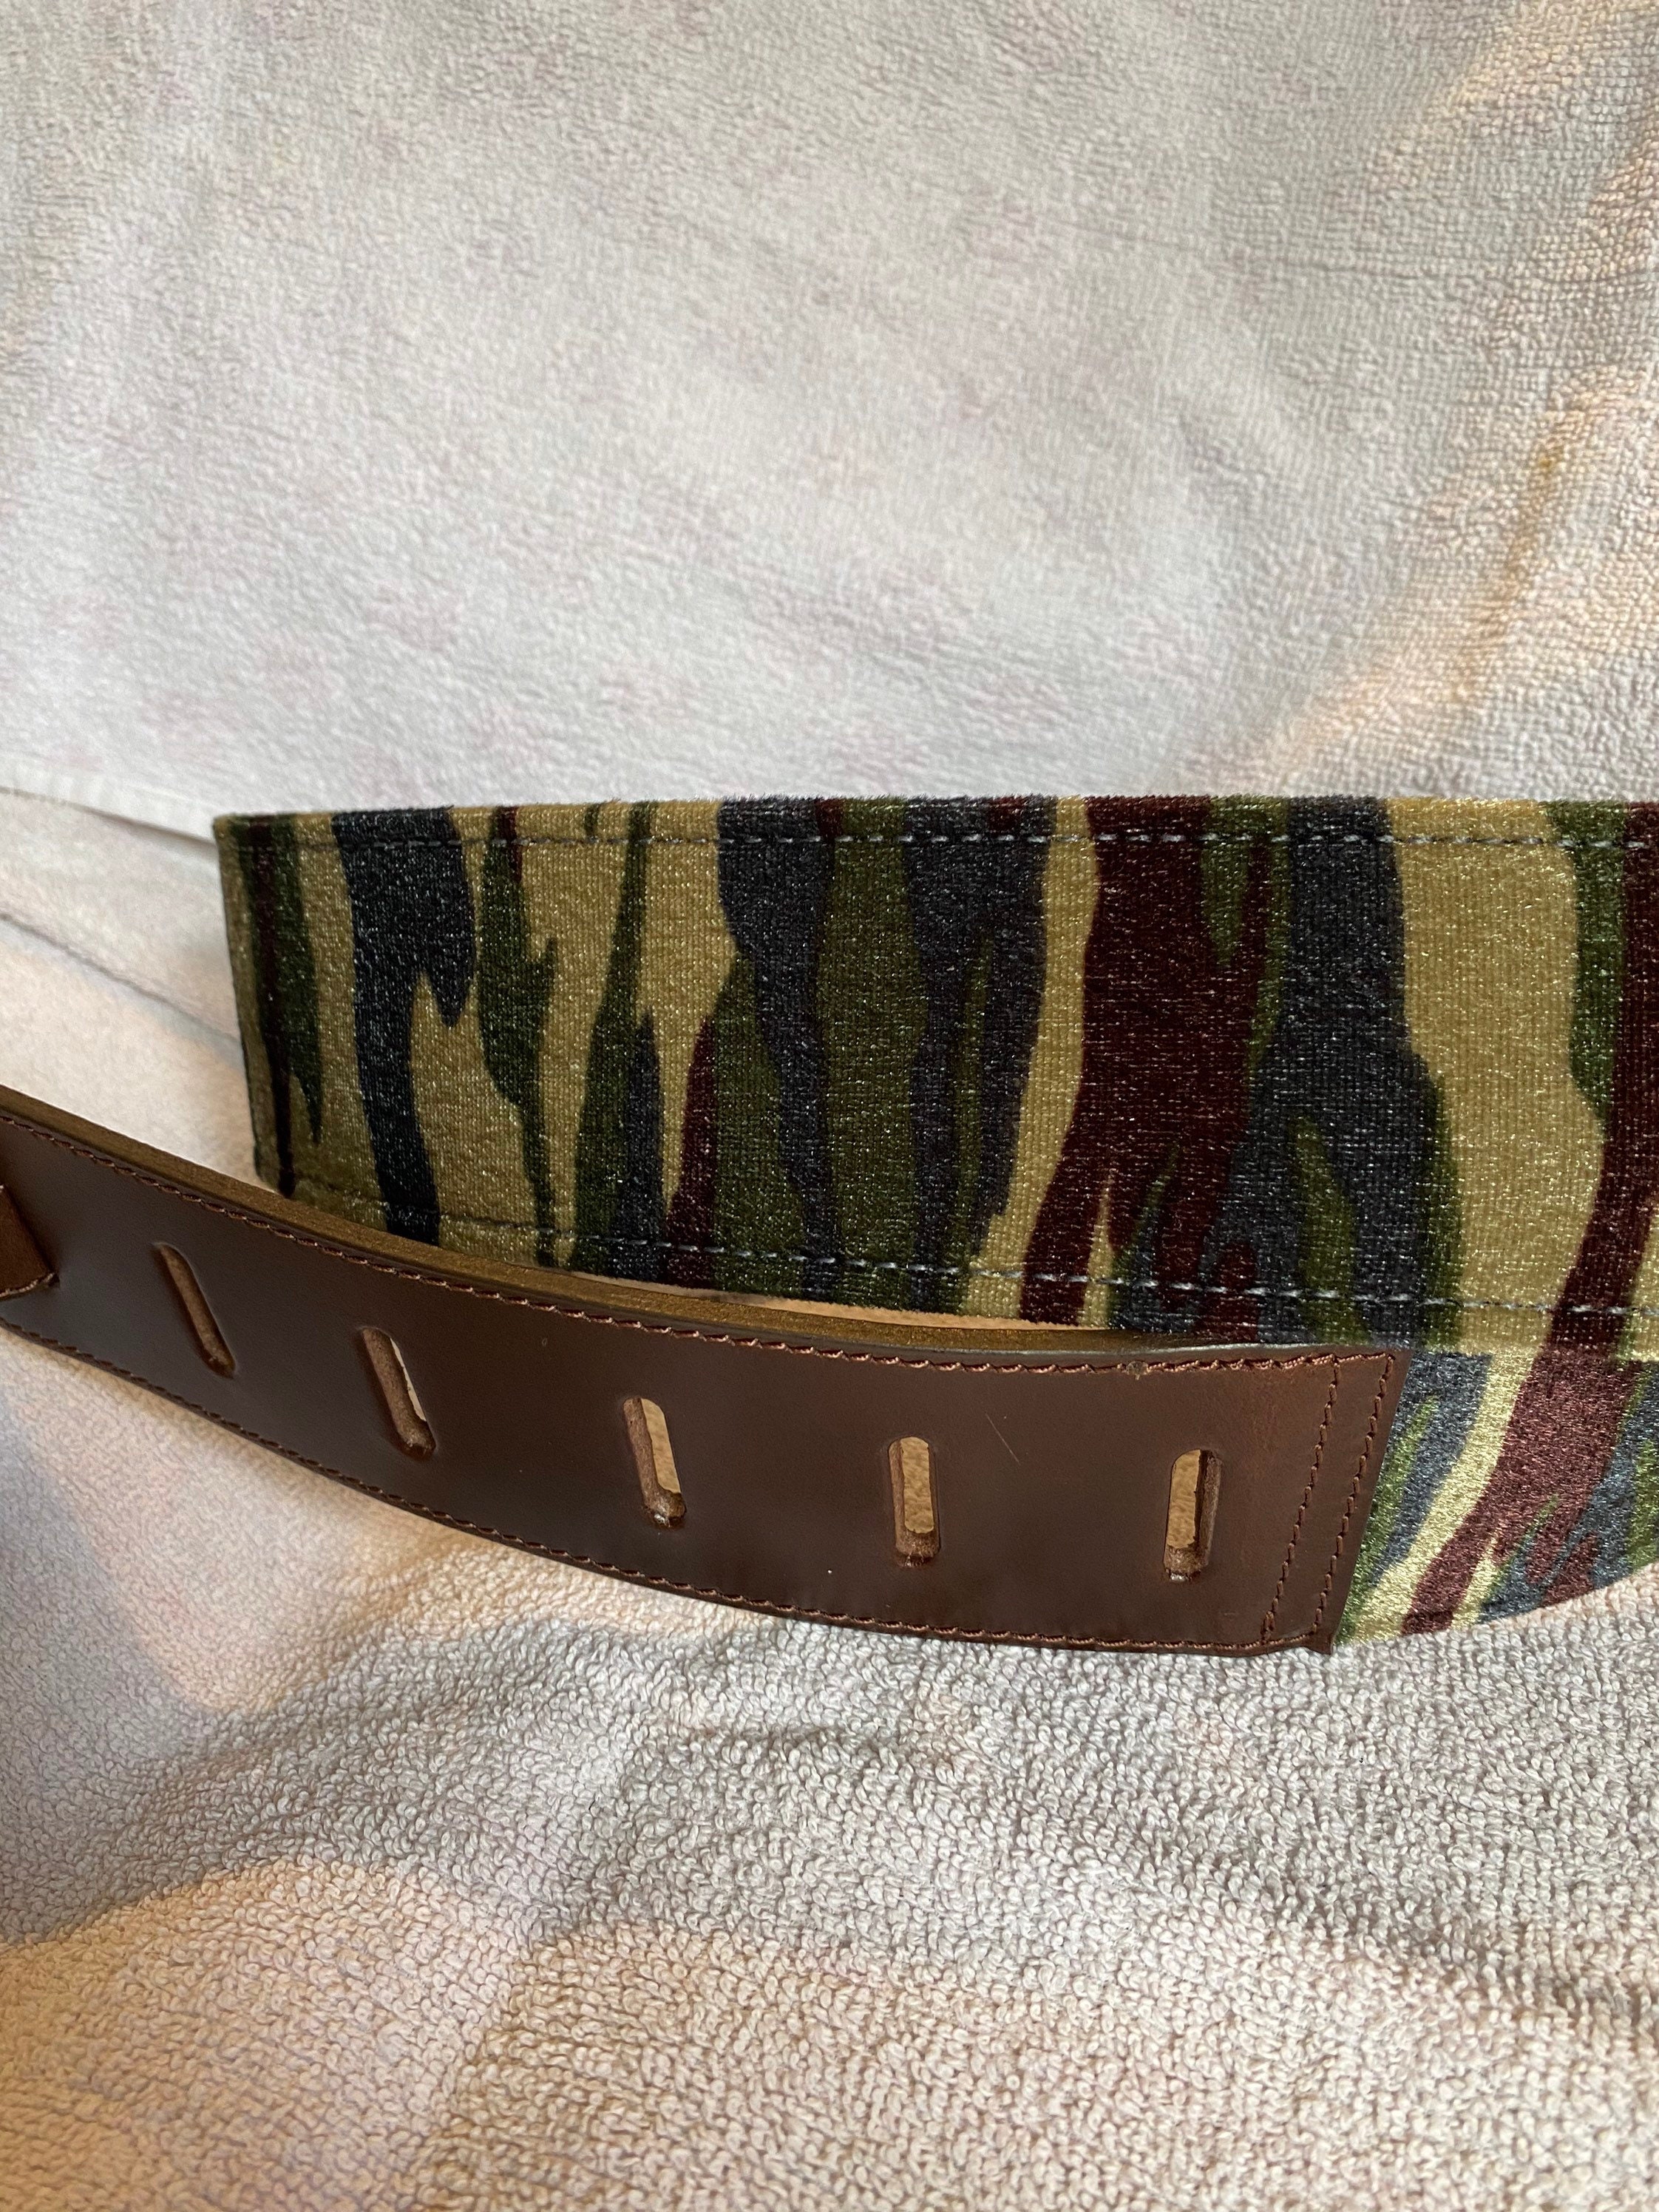 Camouflage Print Purse Strap, Guitar Strap For Handbag